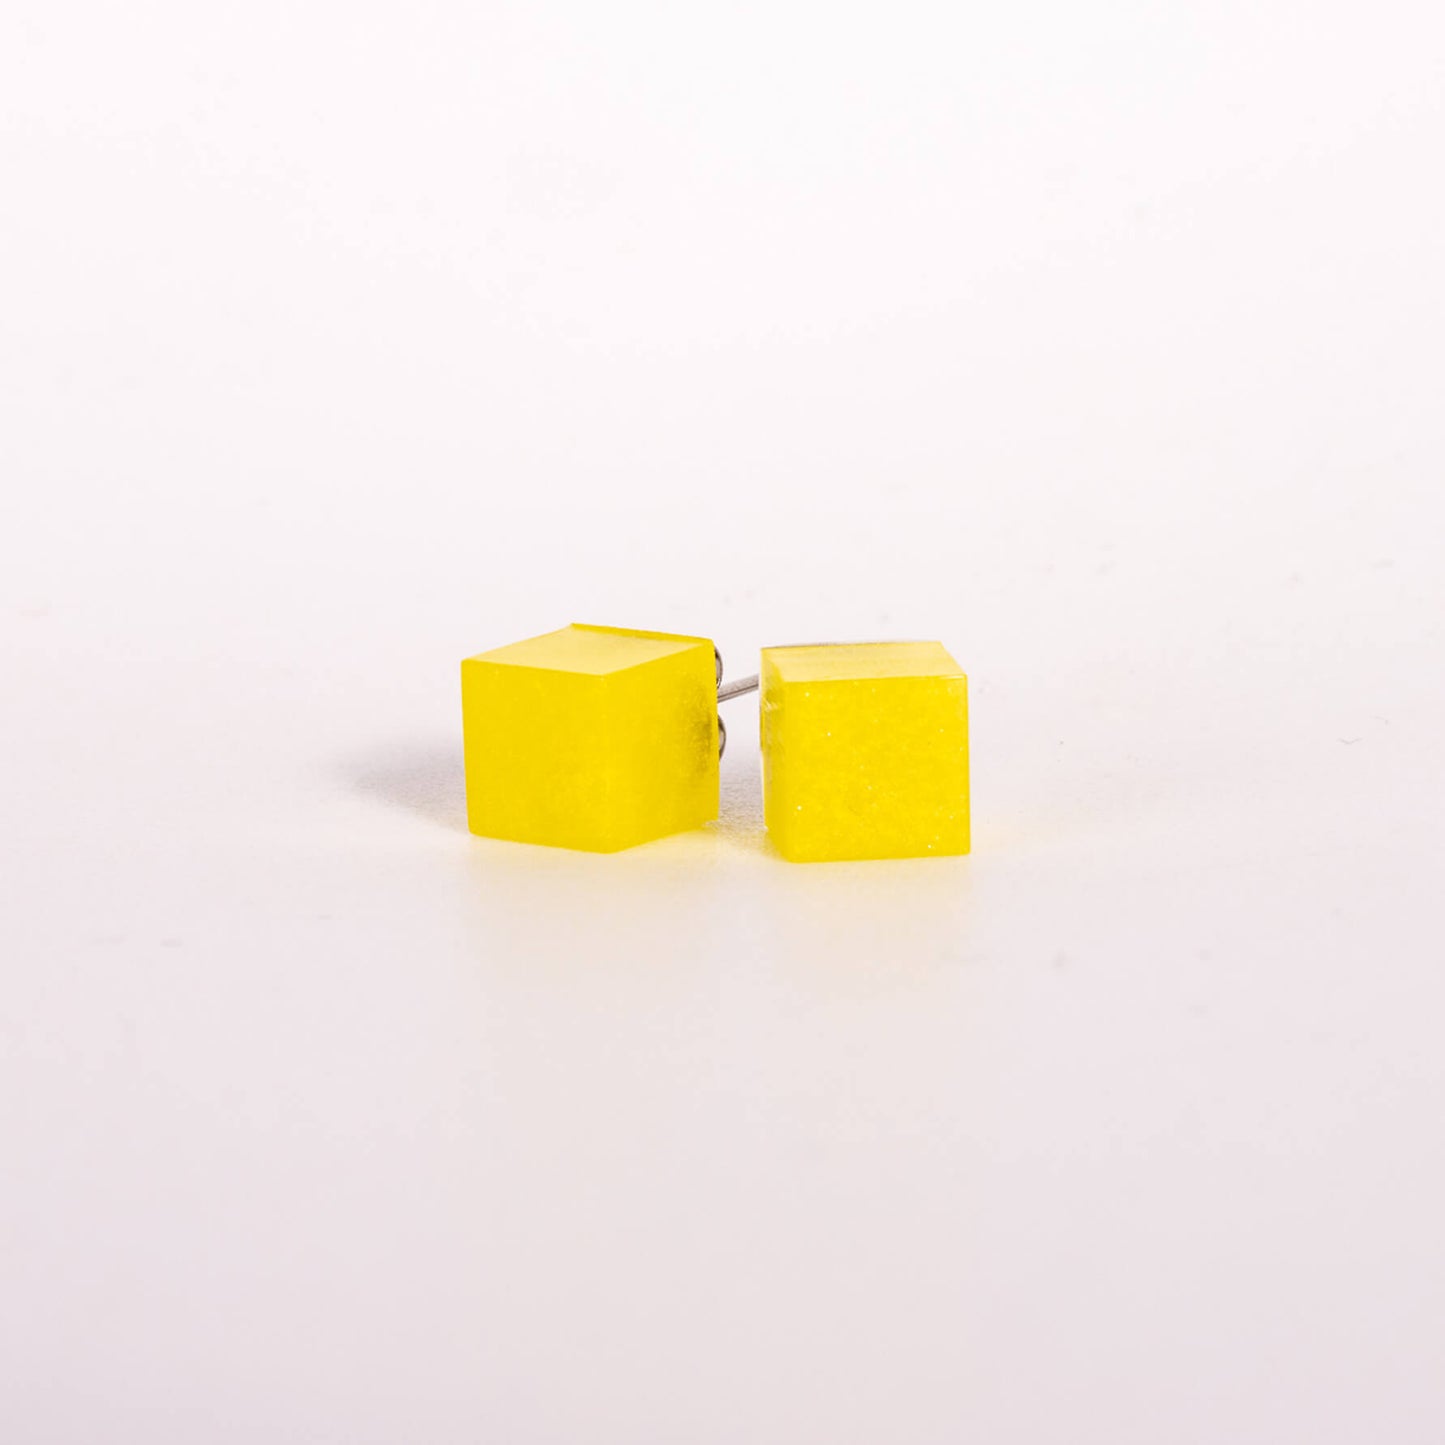 yellow resin cube stud earrings from petone store